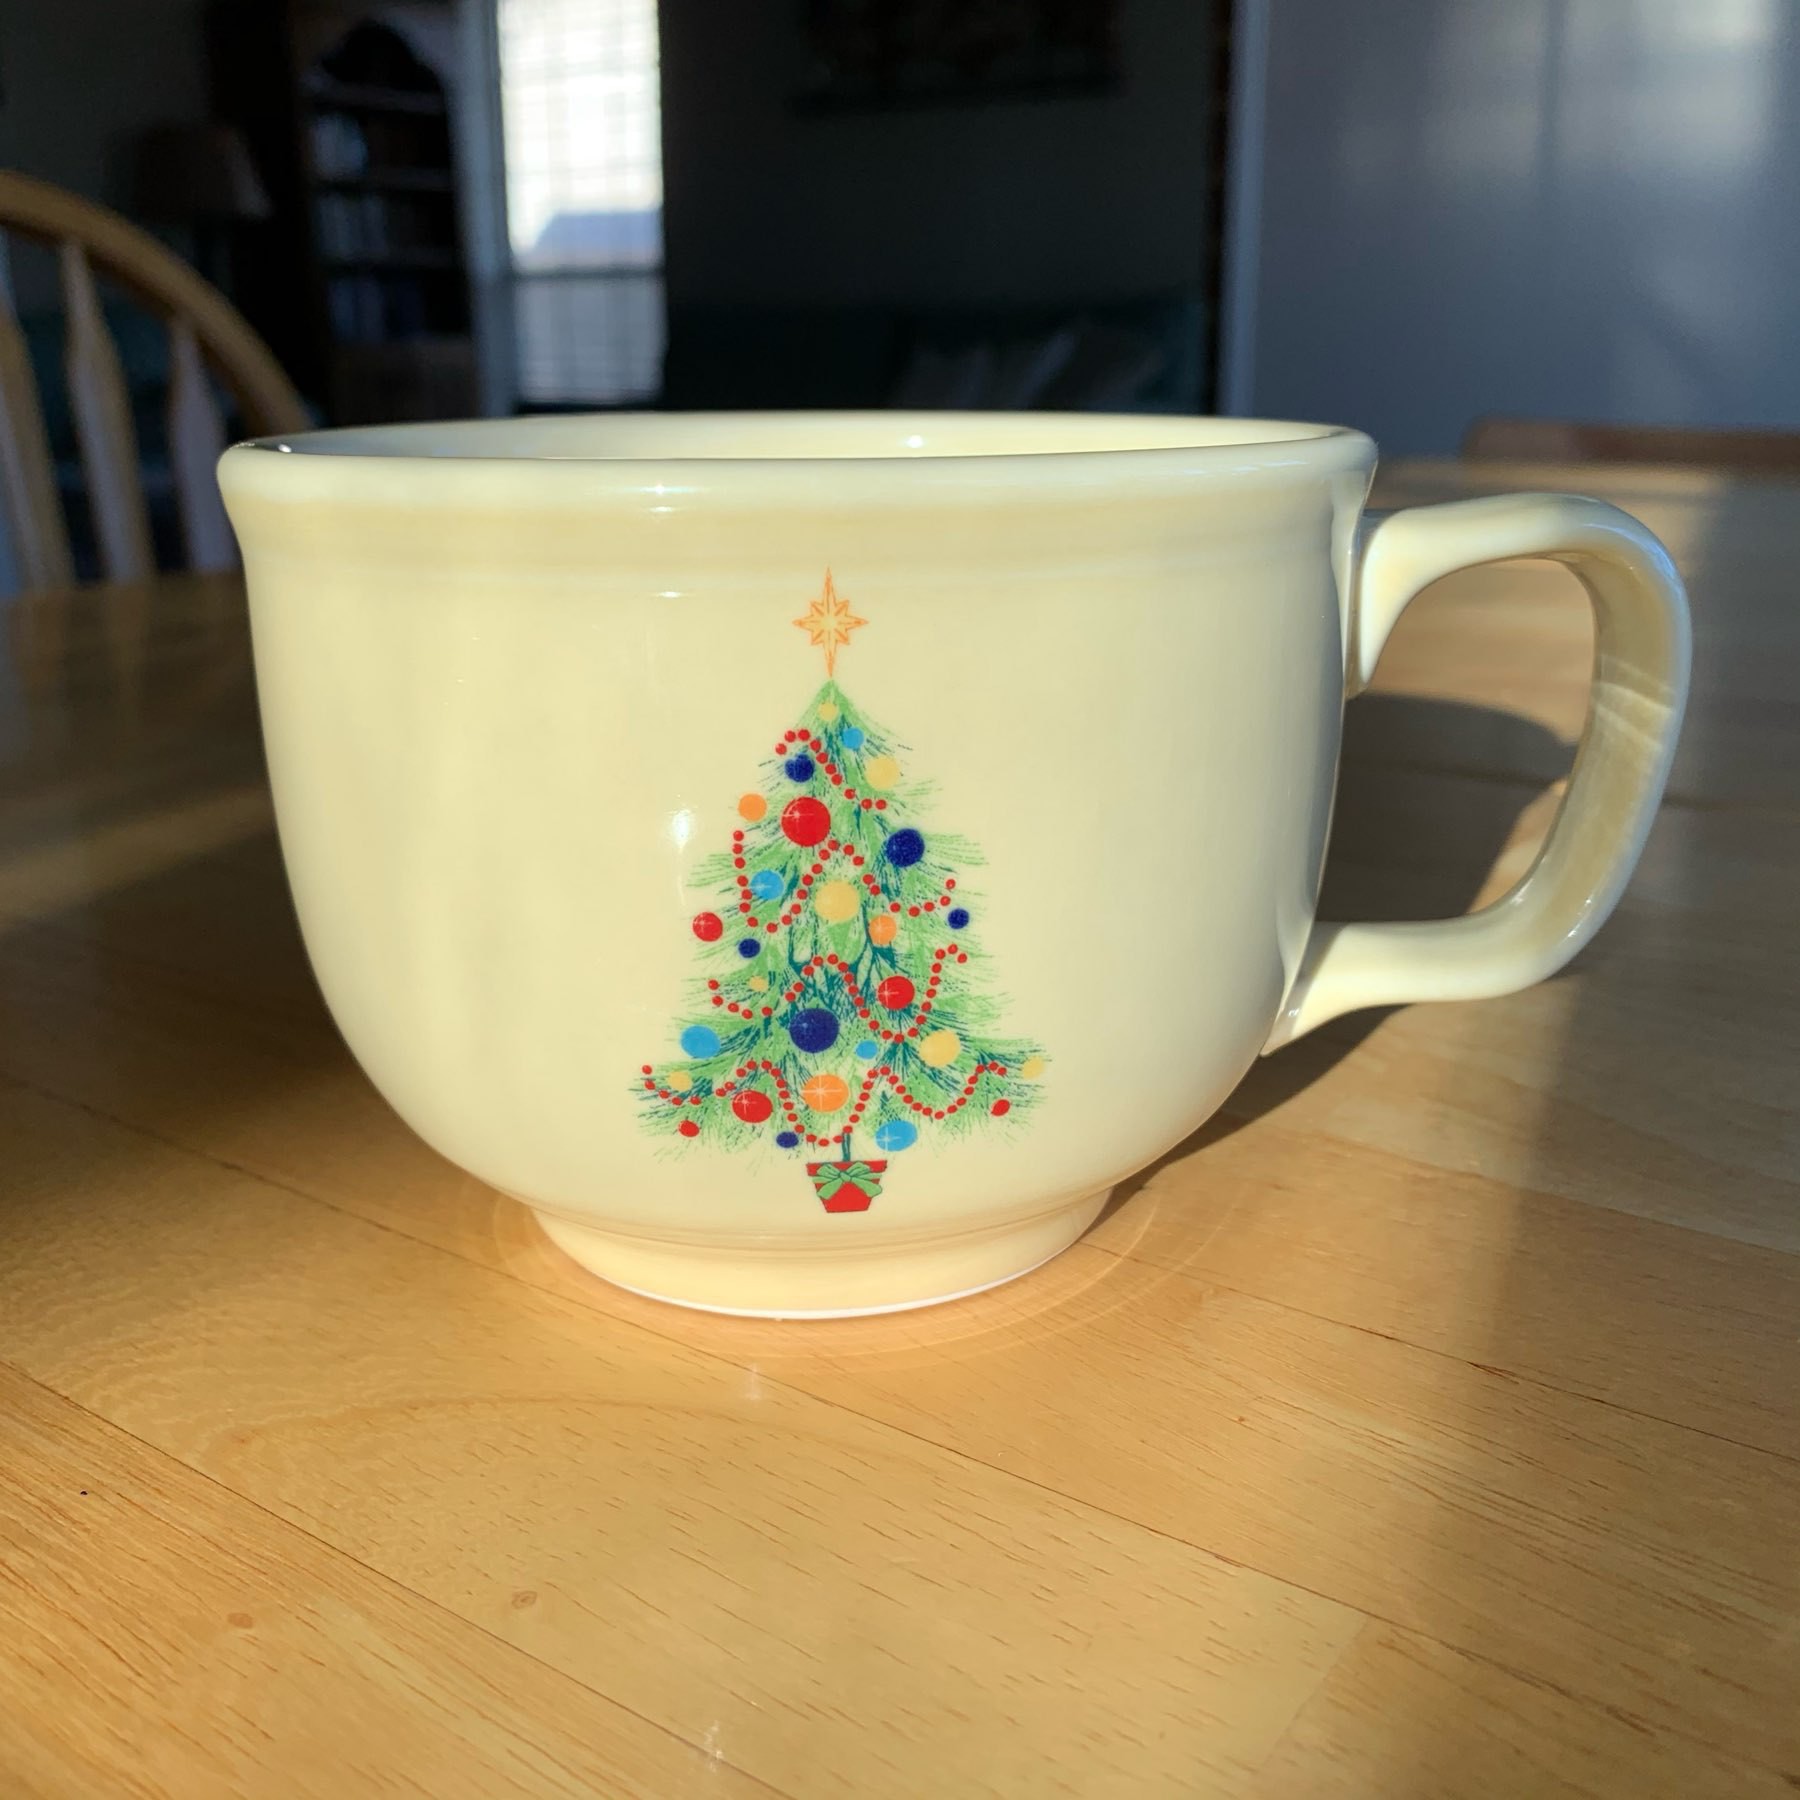 Fiestaware mug with Christmas tree design